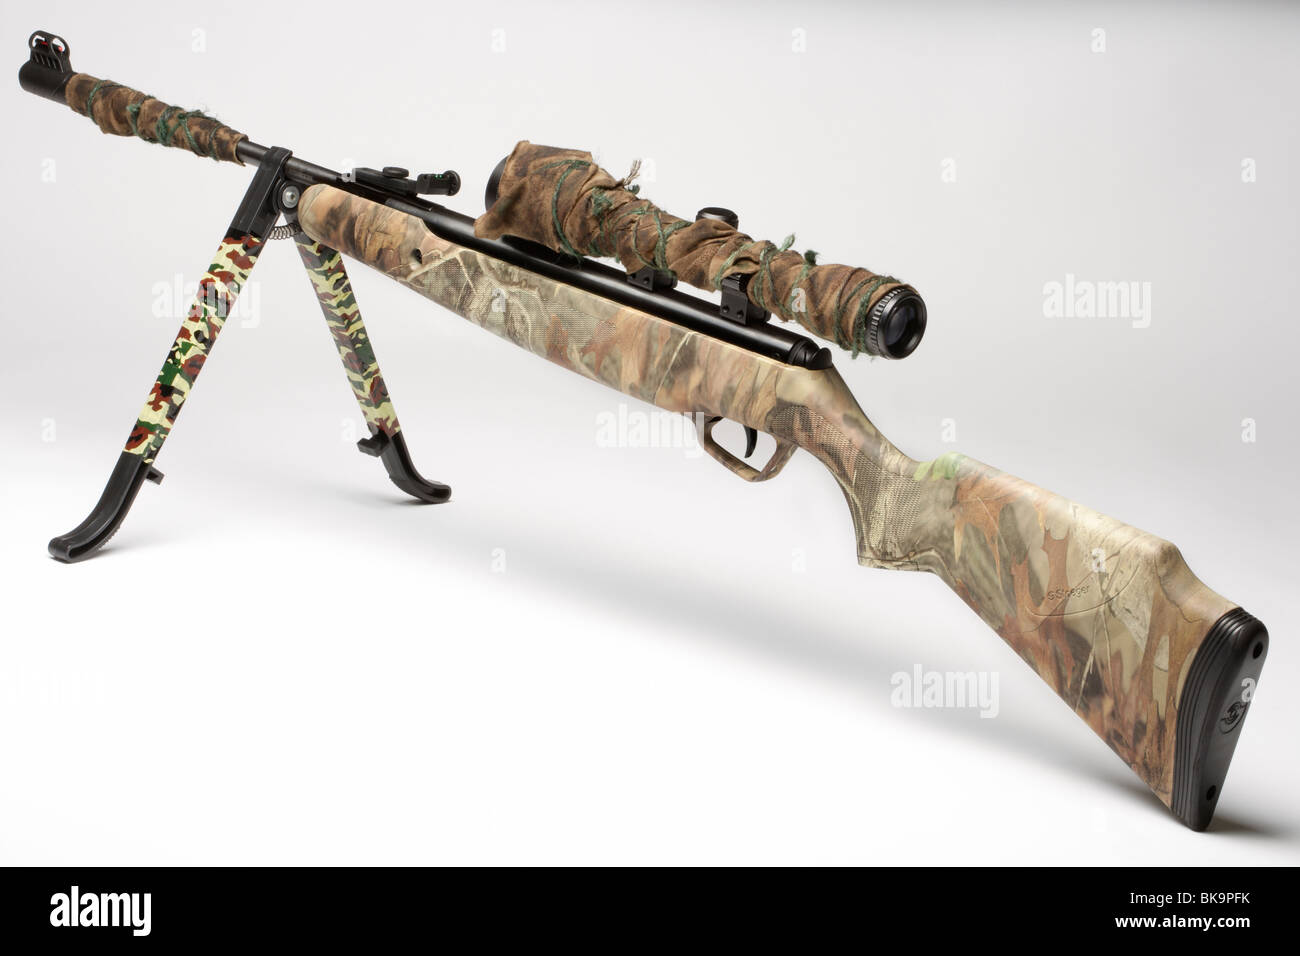 Aire Camoflage pistola rifle con mira telescópica y soporte Foto de stock